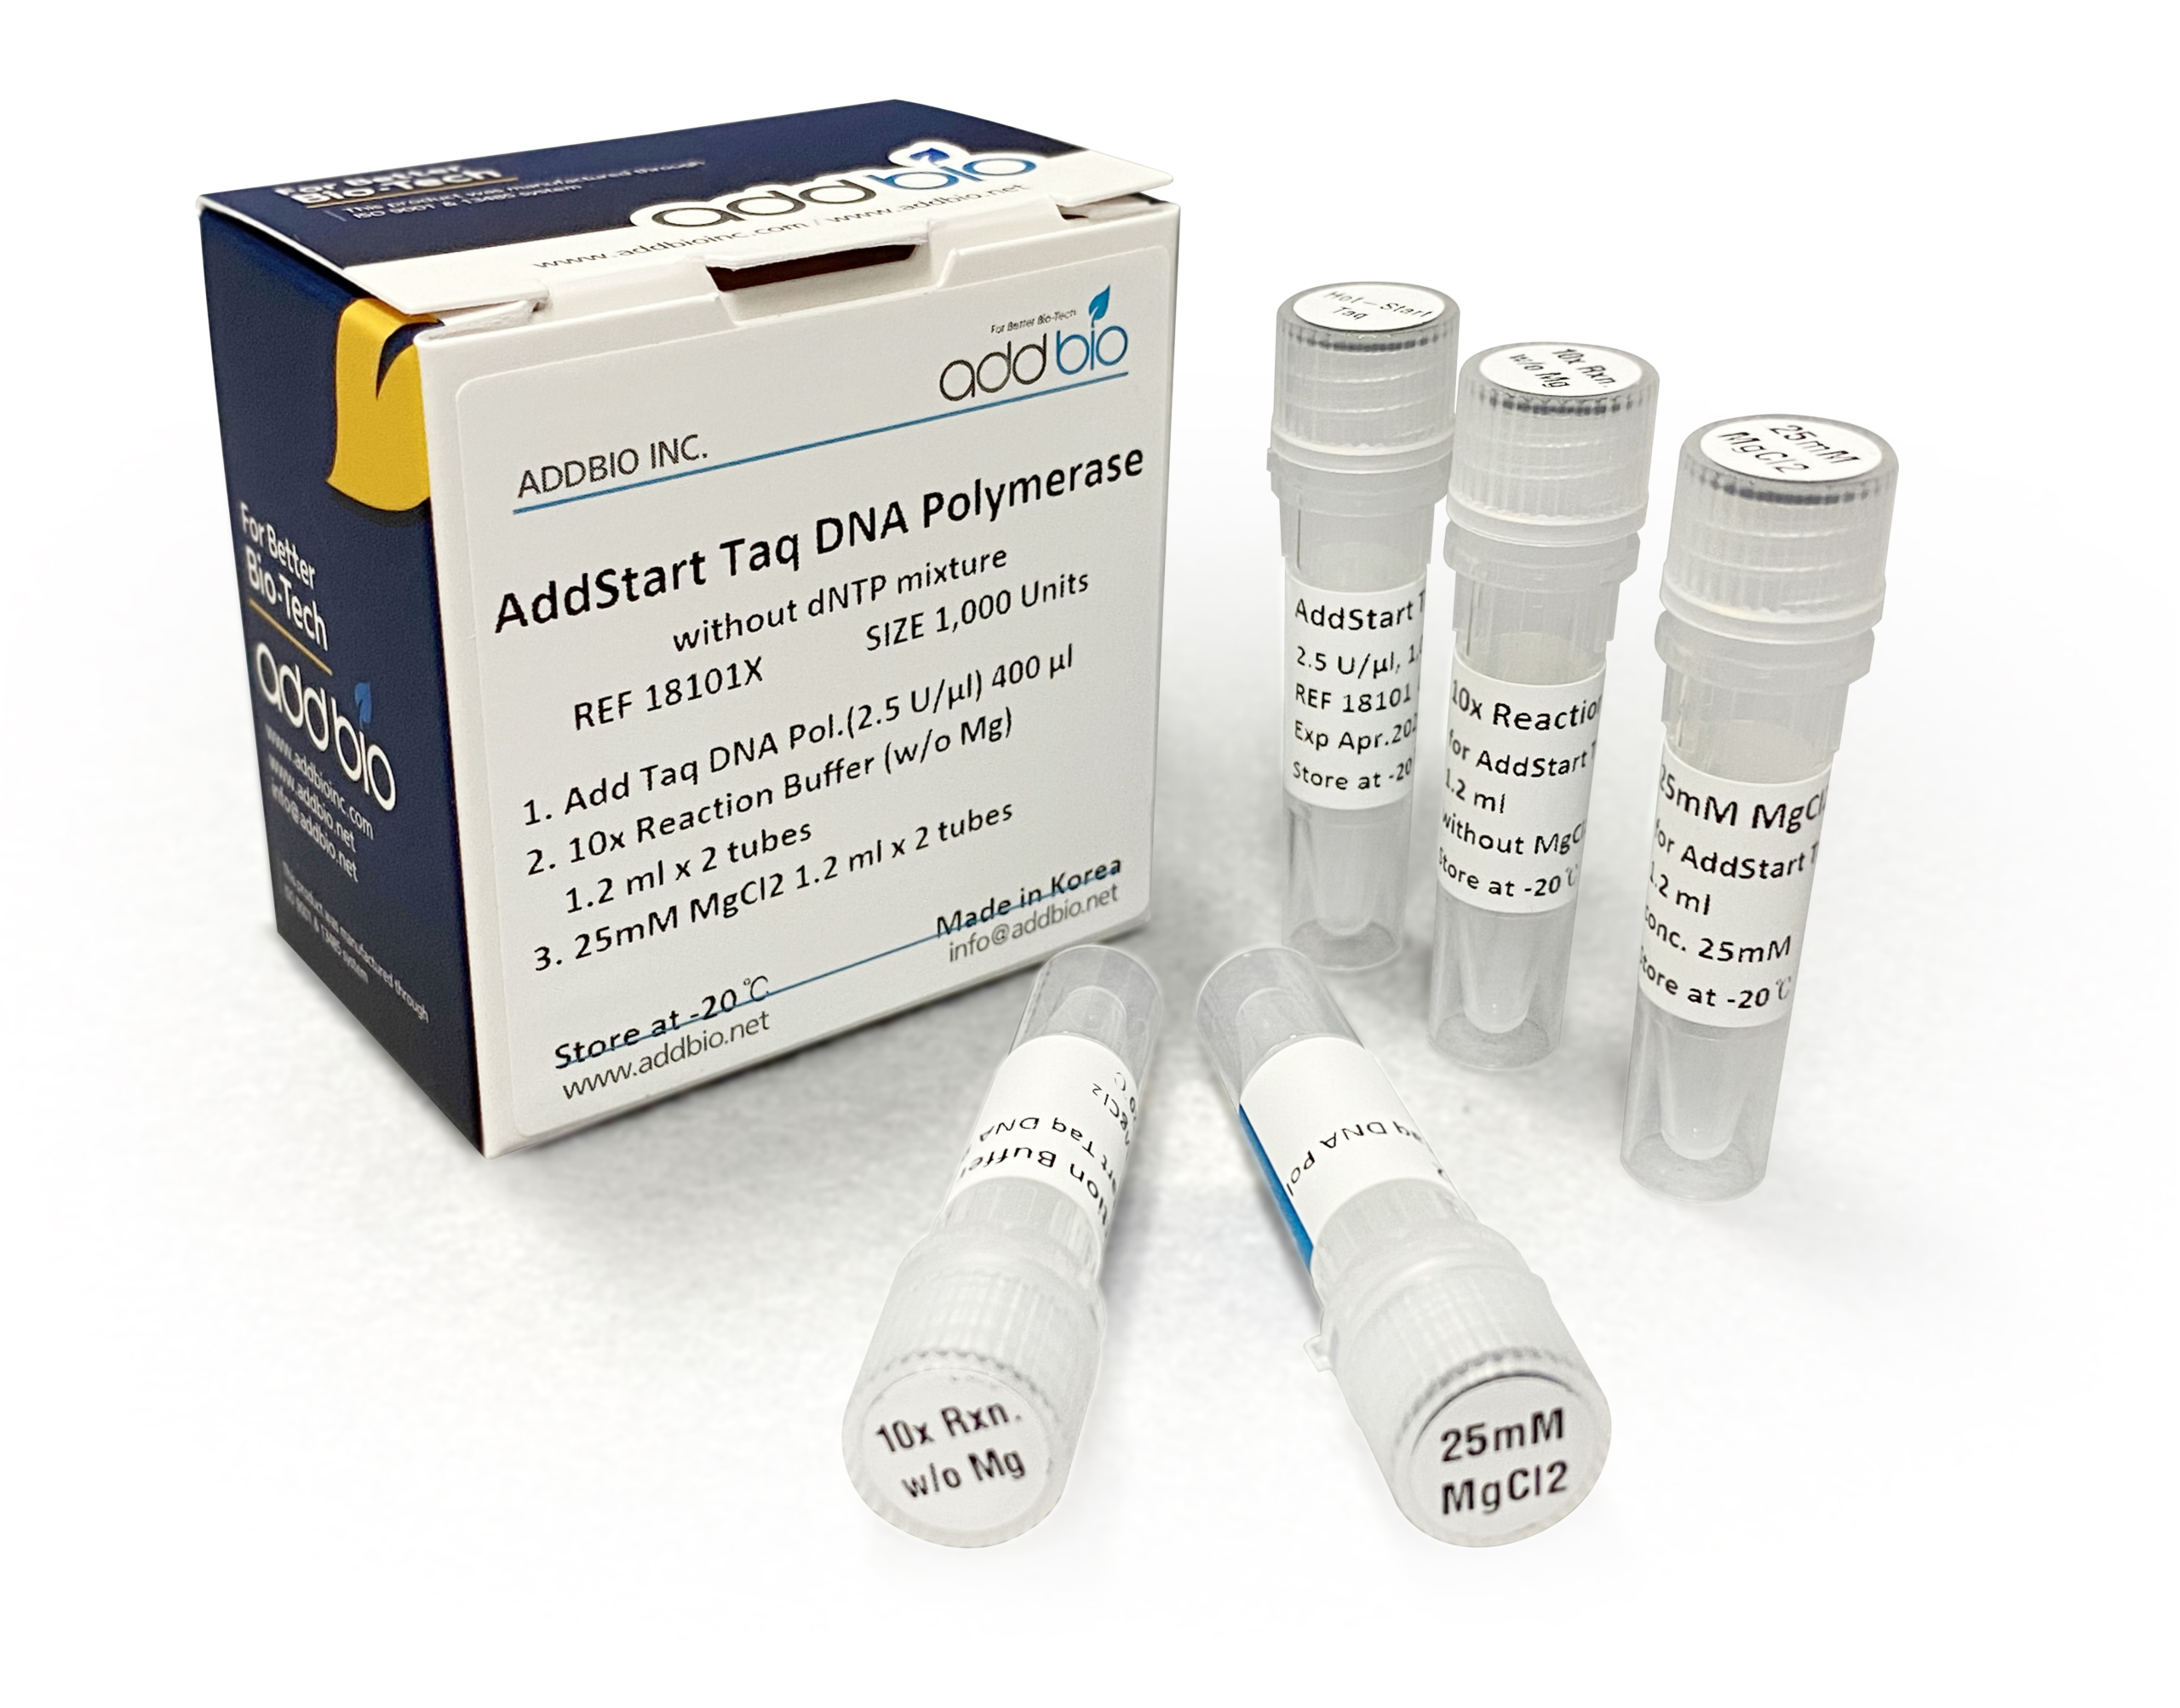 تگ DNA پلیمراز (addbio) - کیت AddStart Taq DNA Polymerase - شرکت درمان نگار